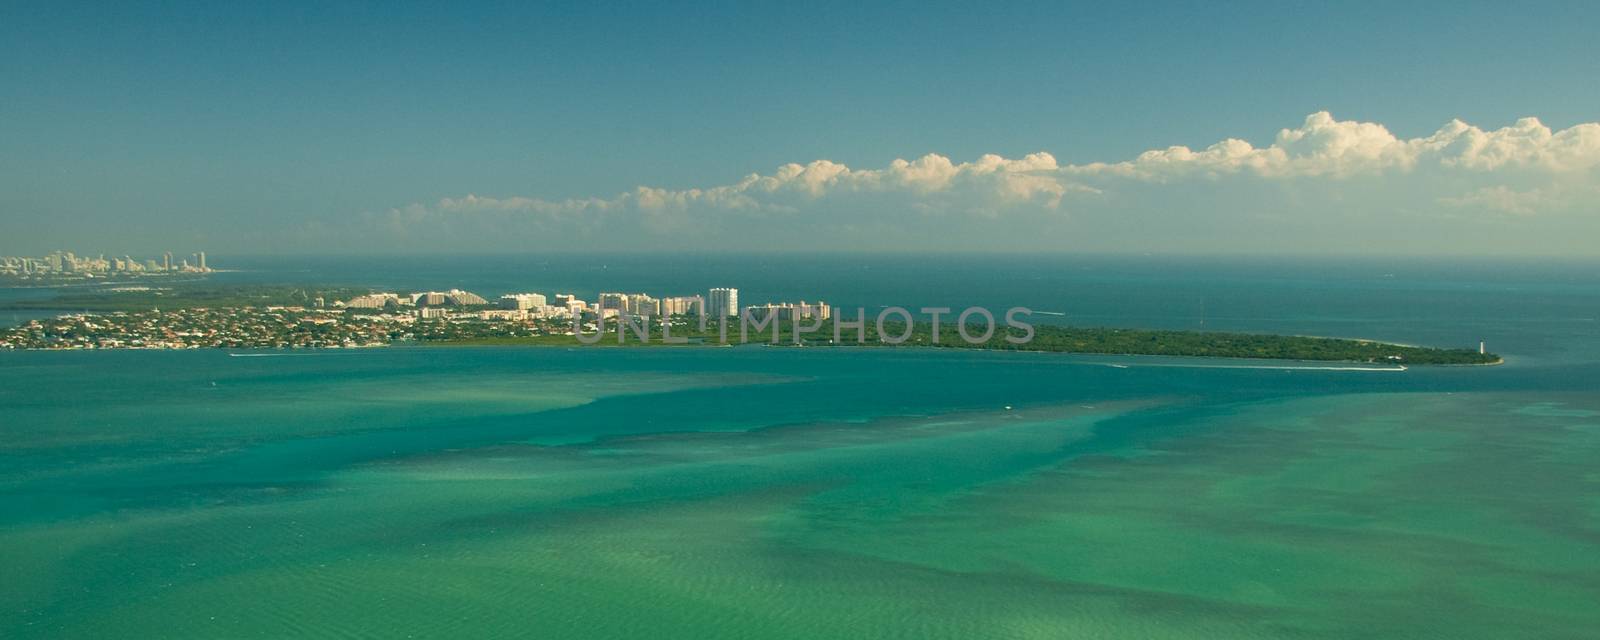 Aerial view of the Atlantic Ocean, Miami, Florida, USA